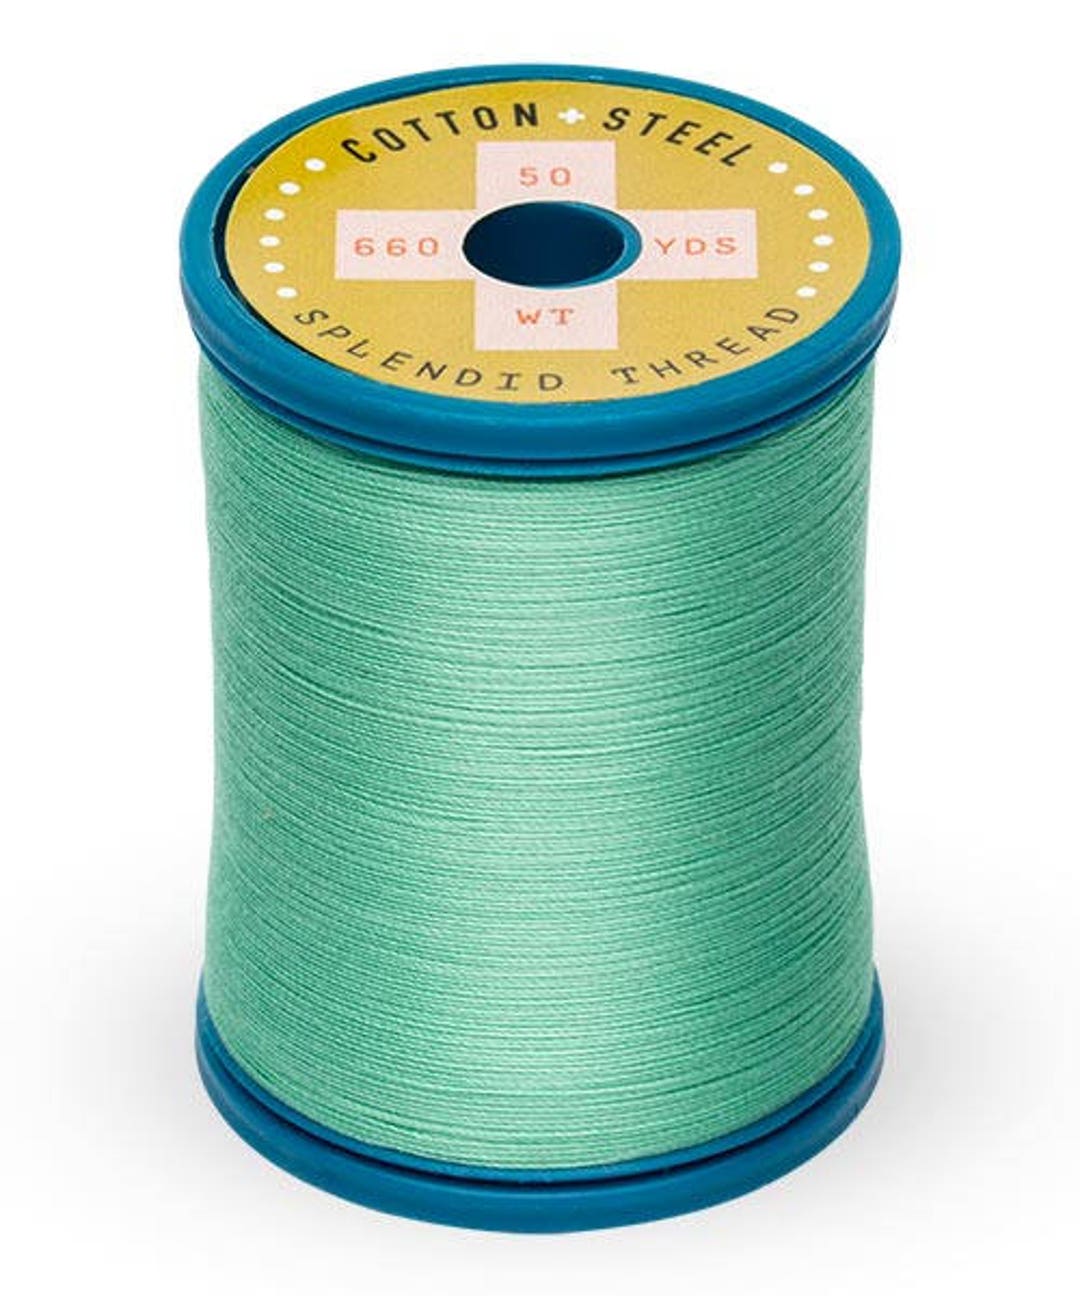 Rosewood Manor Cotton Petites, the Handiest Handwork Thread, Sulky Thread,  6 Colors, 12 Wt Thread 